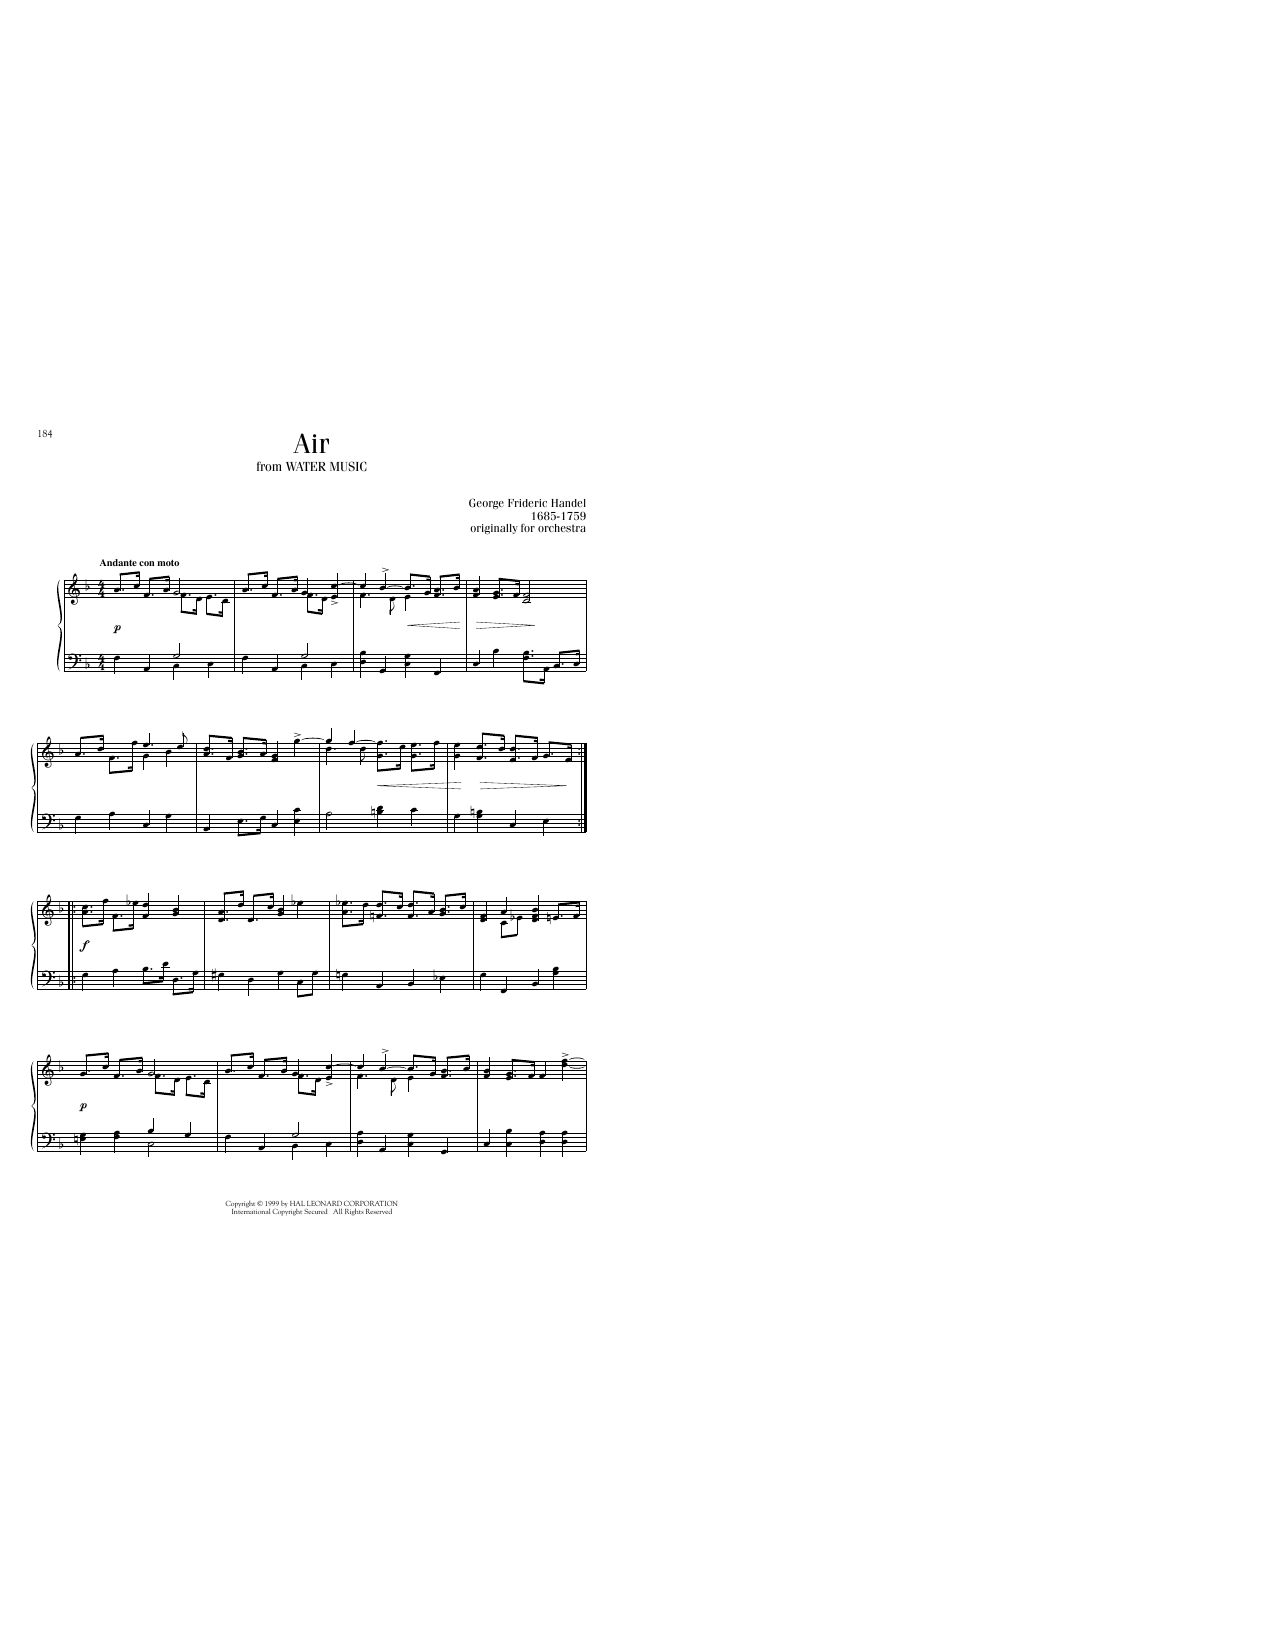 George Frideric Handel Air sheet music notes printable PDF score